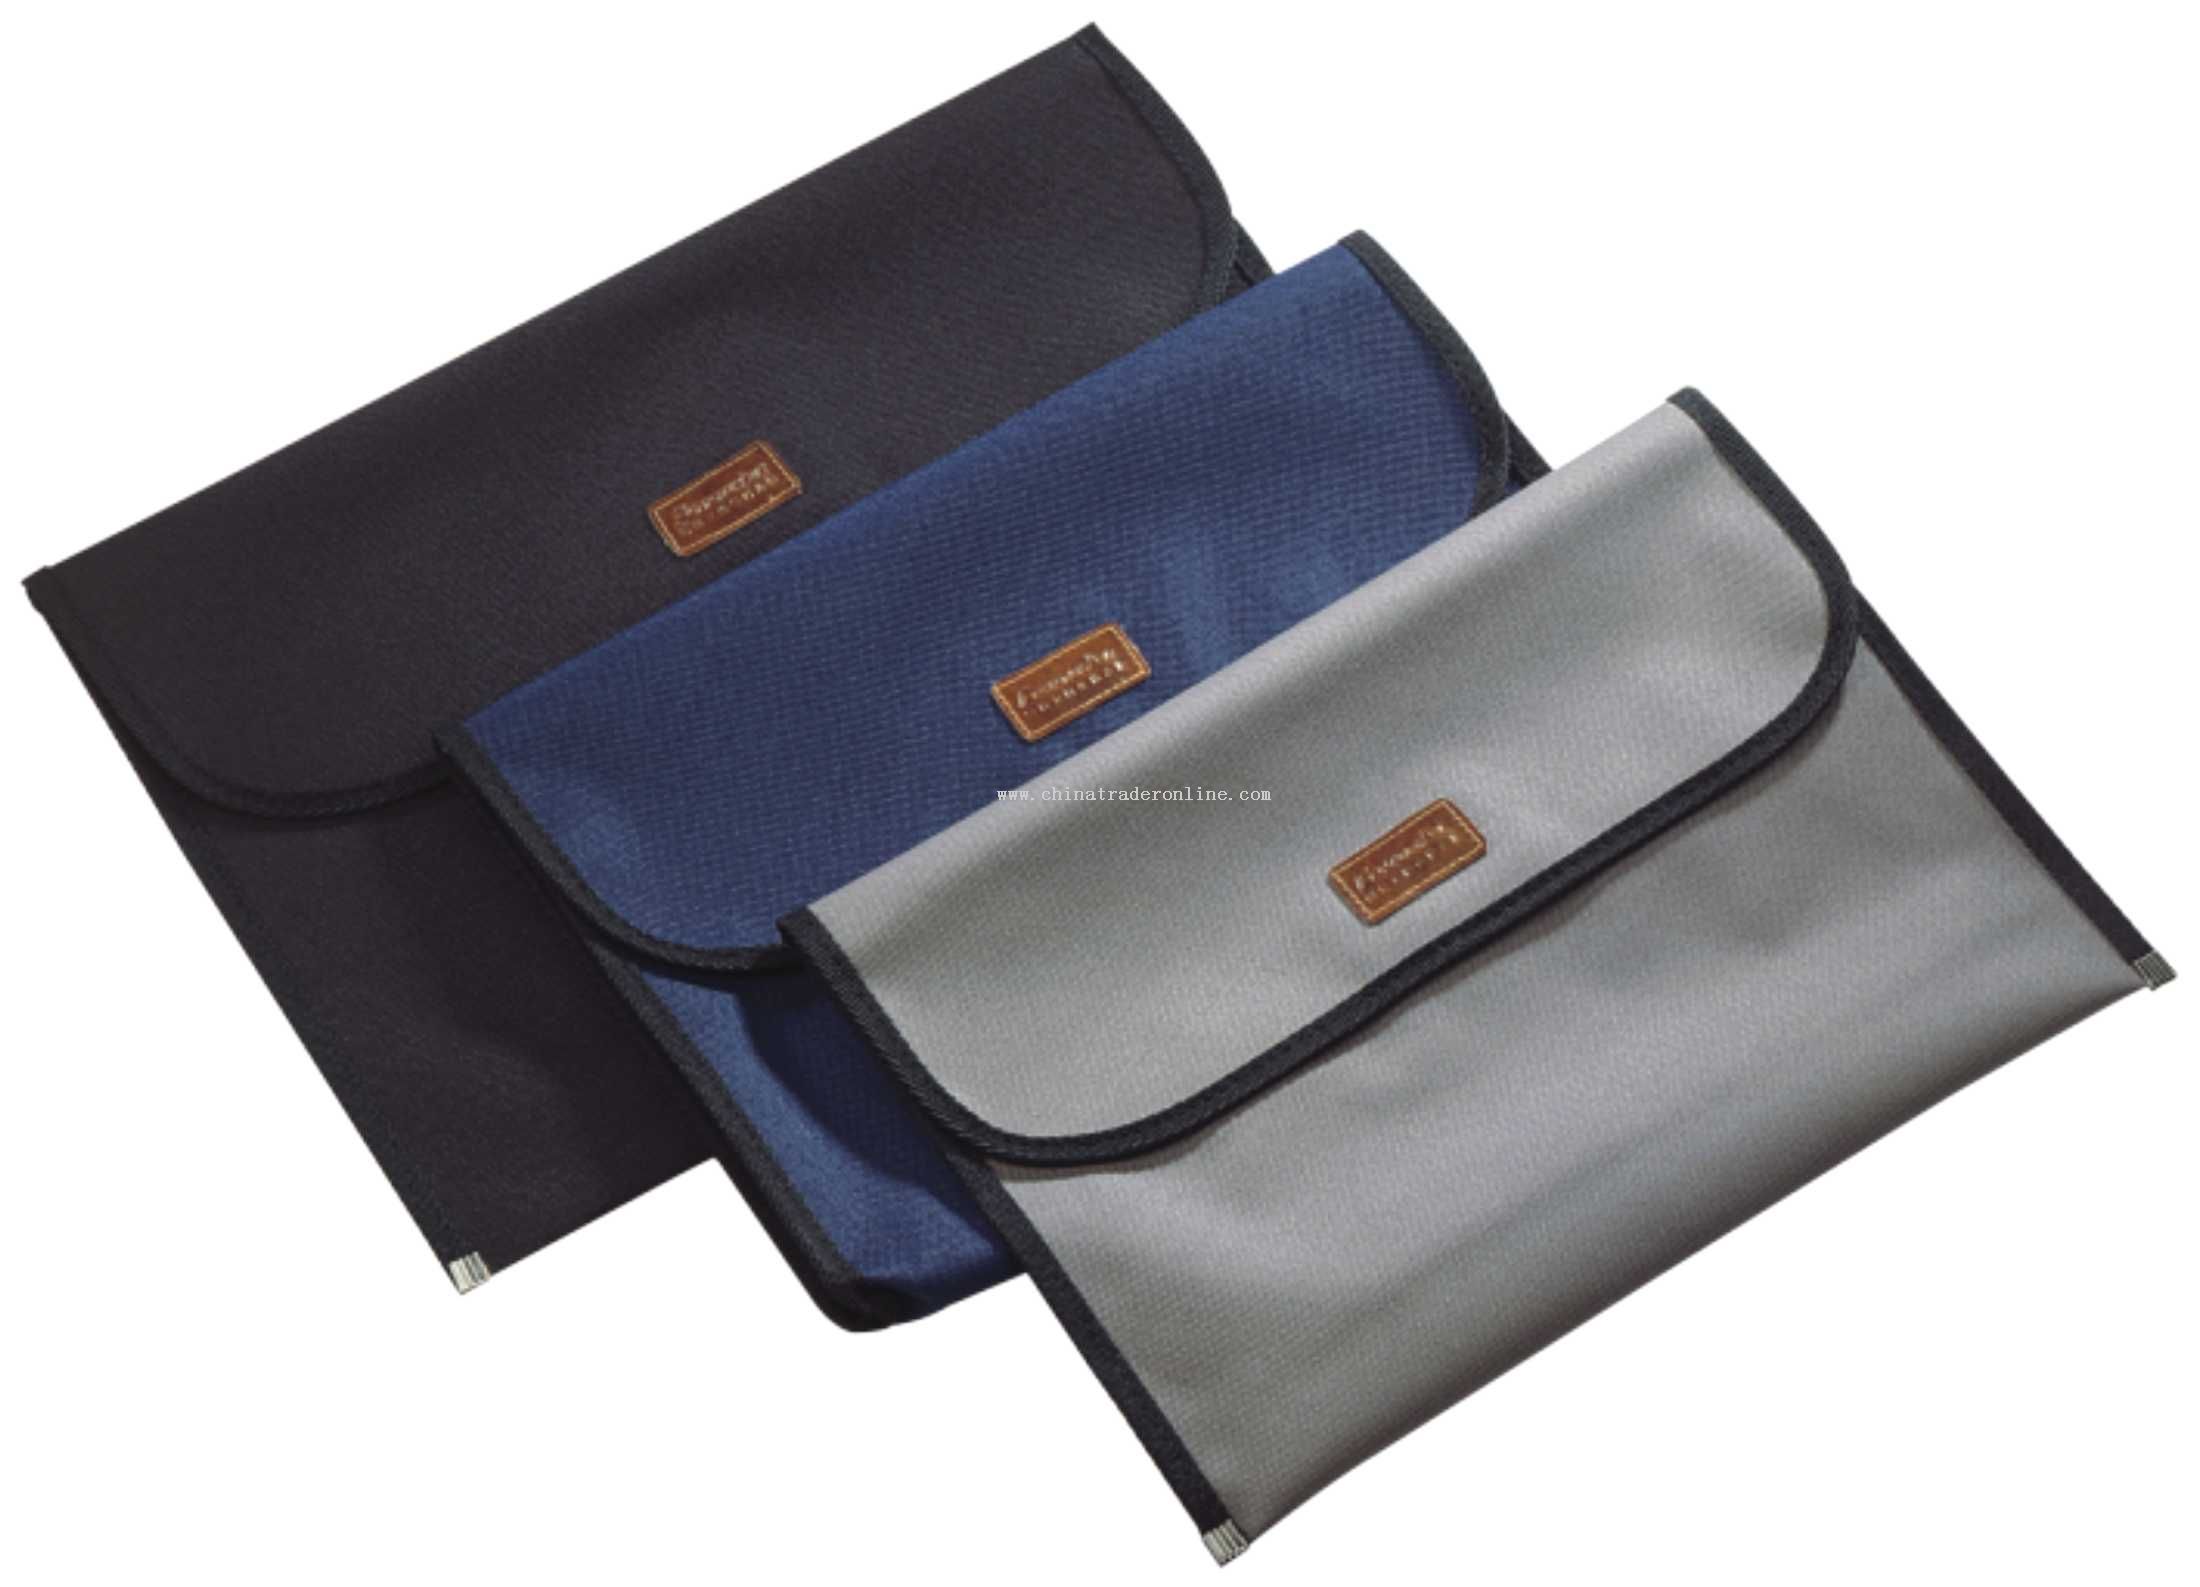 Fabric zipper bag (envelop design) from China